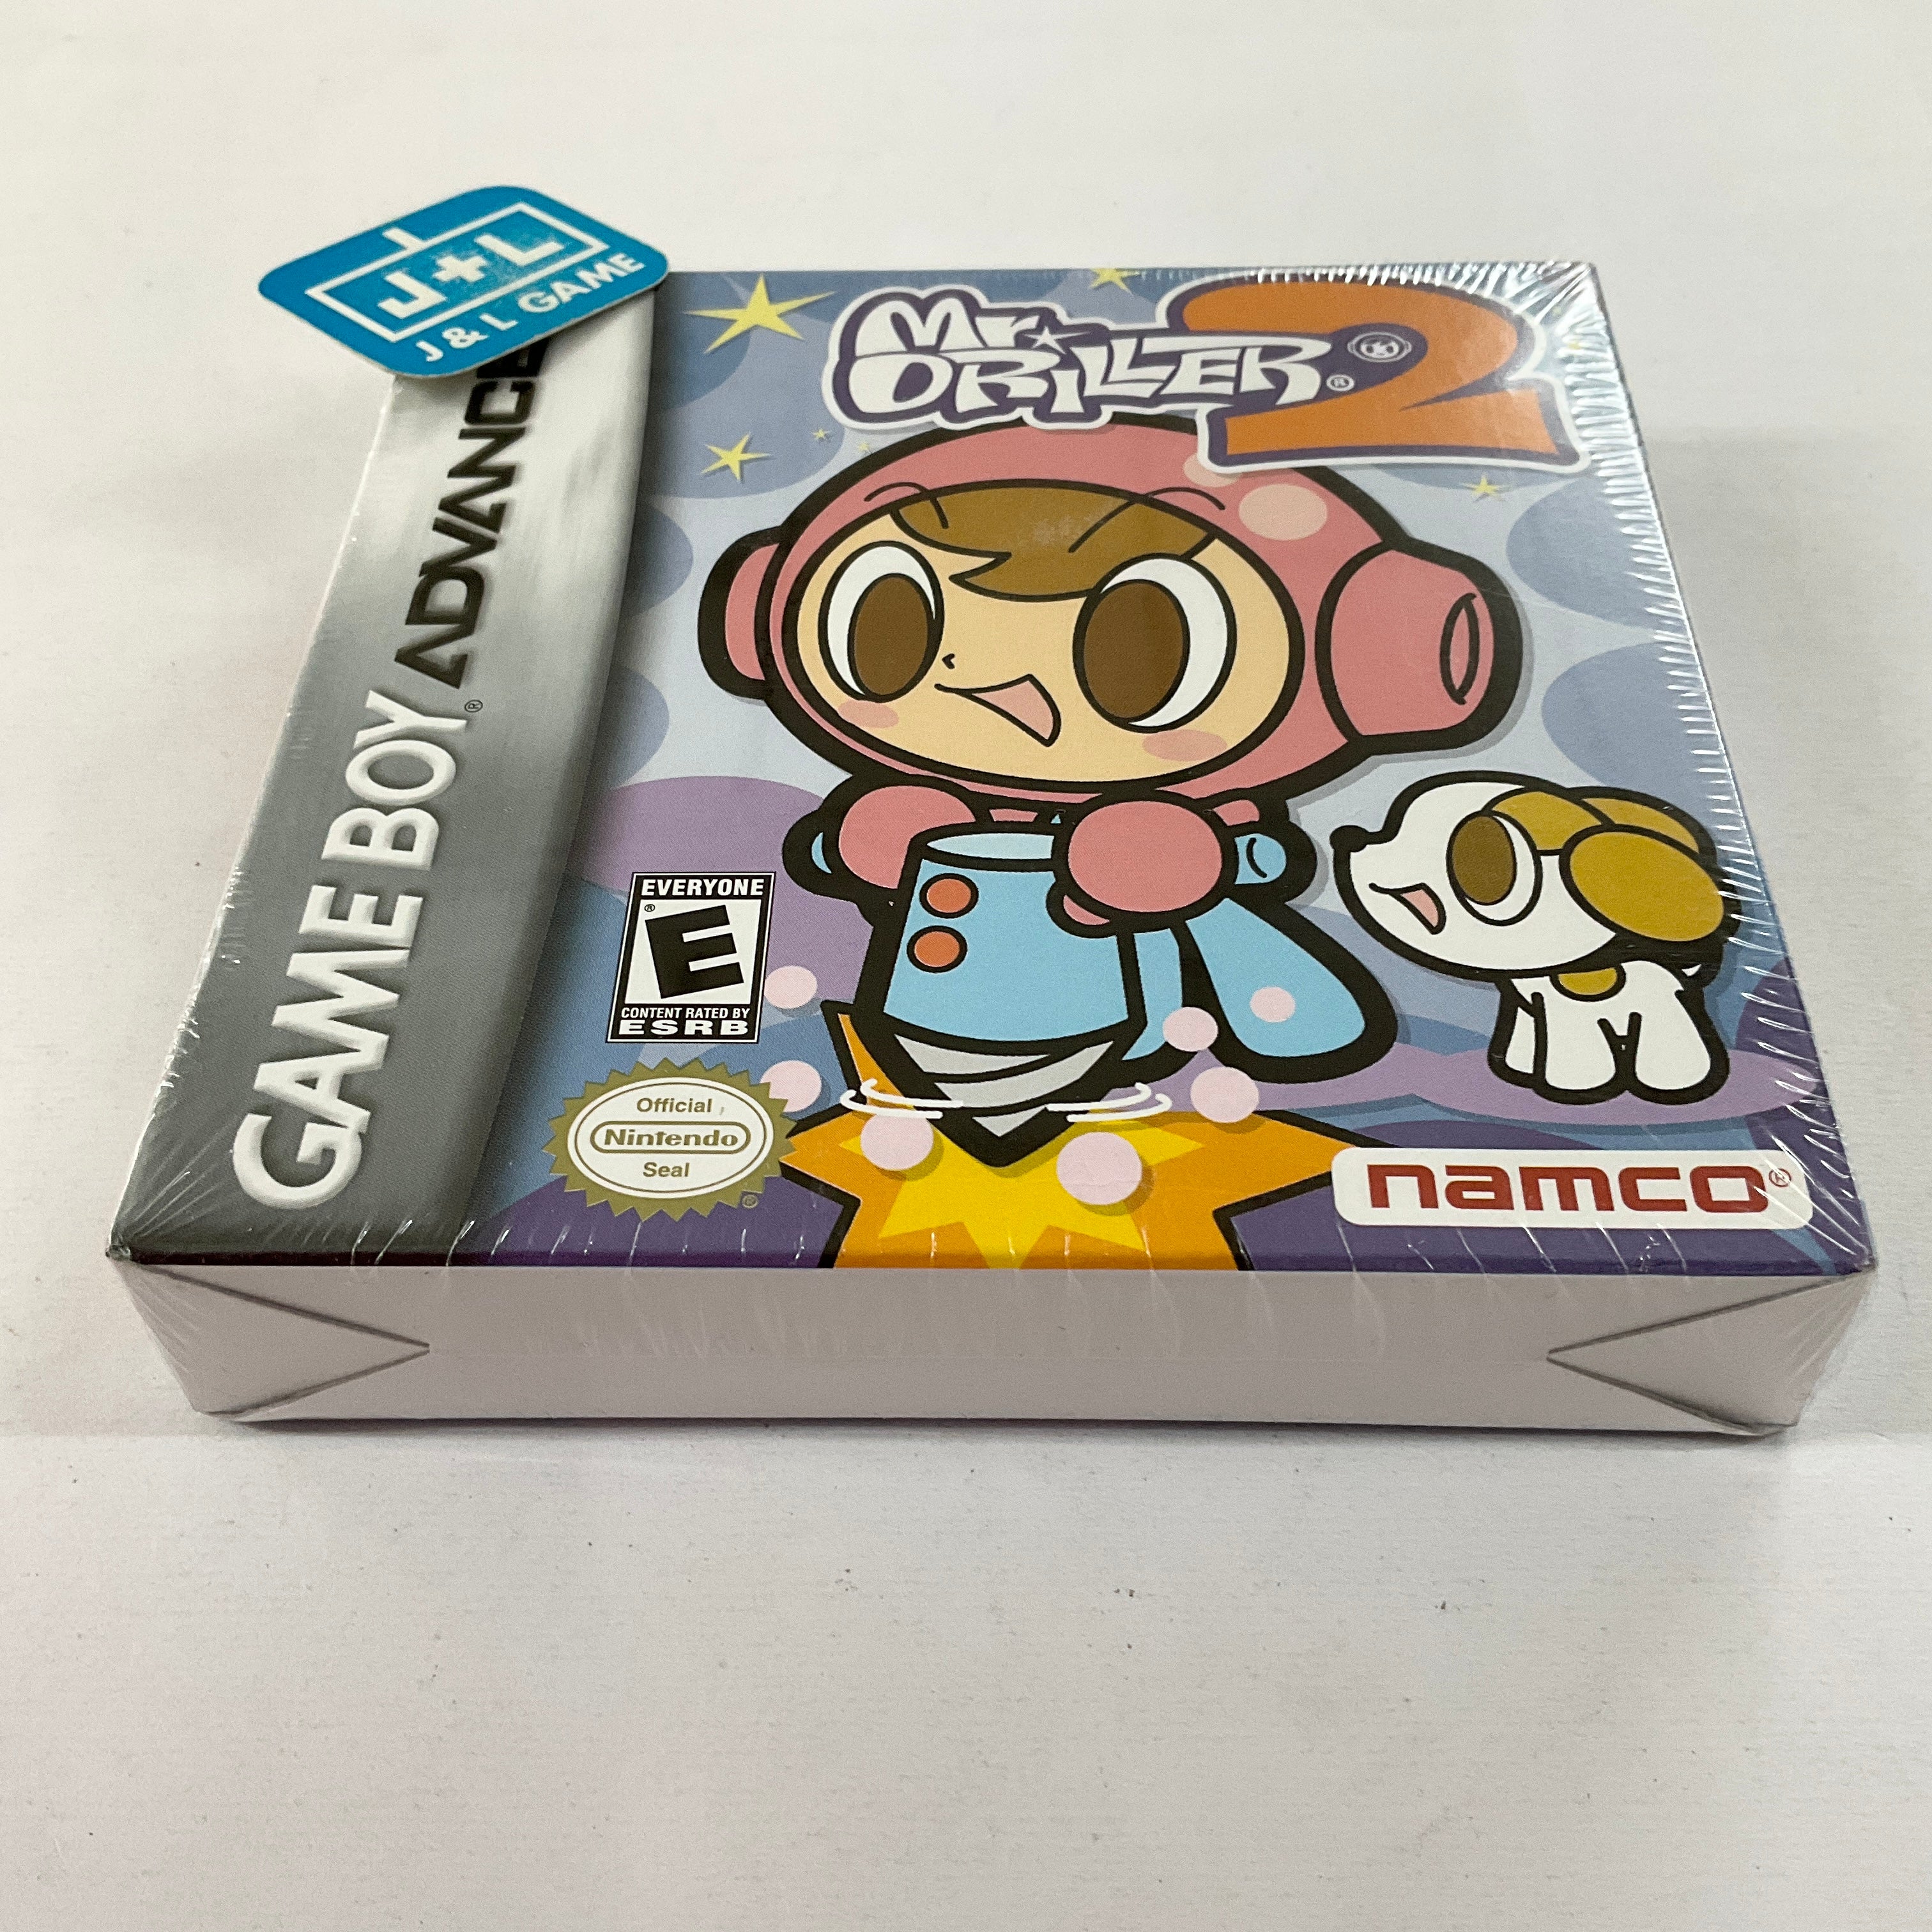 Mr. Driller 2 - (GBA) Game Boy Advance Video Games Namco   